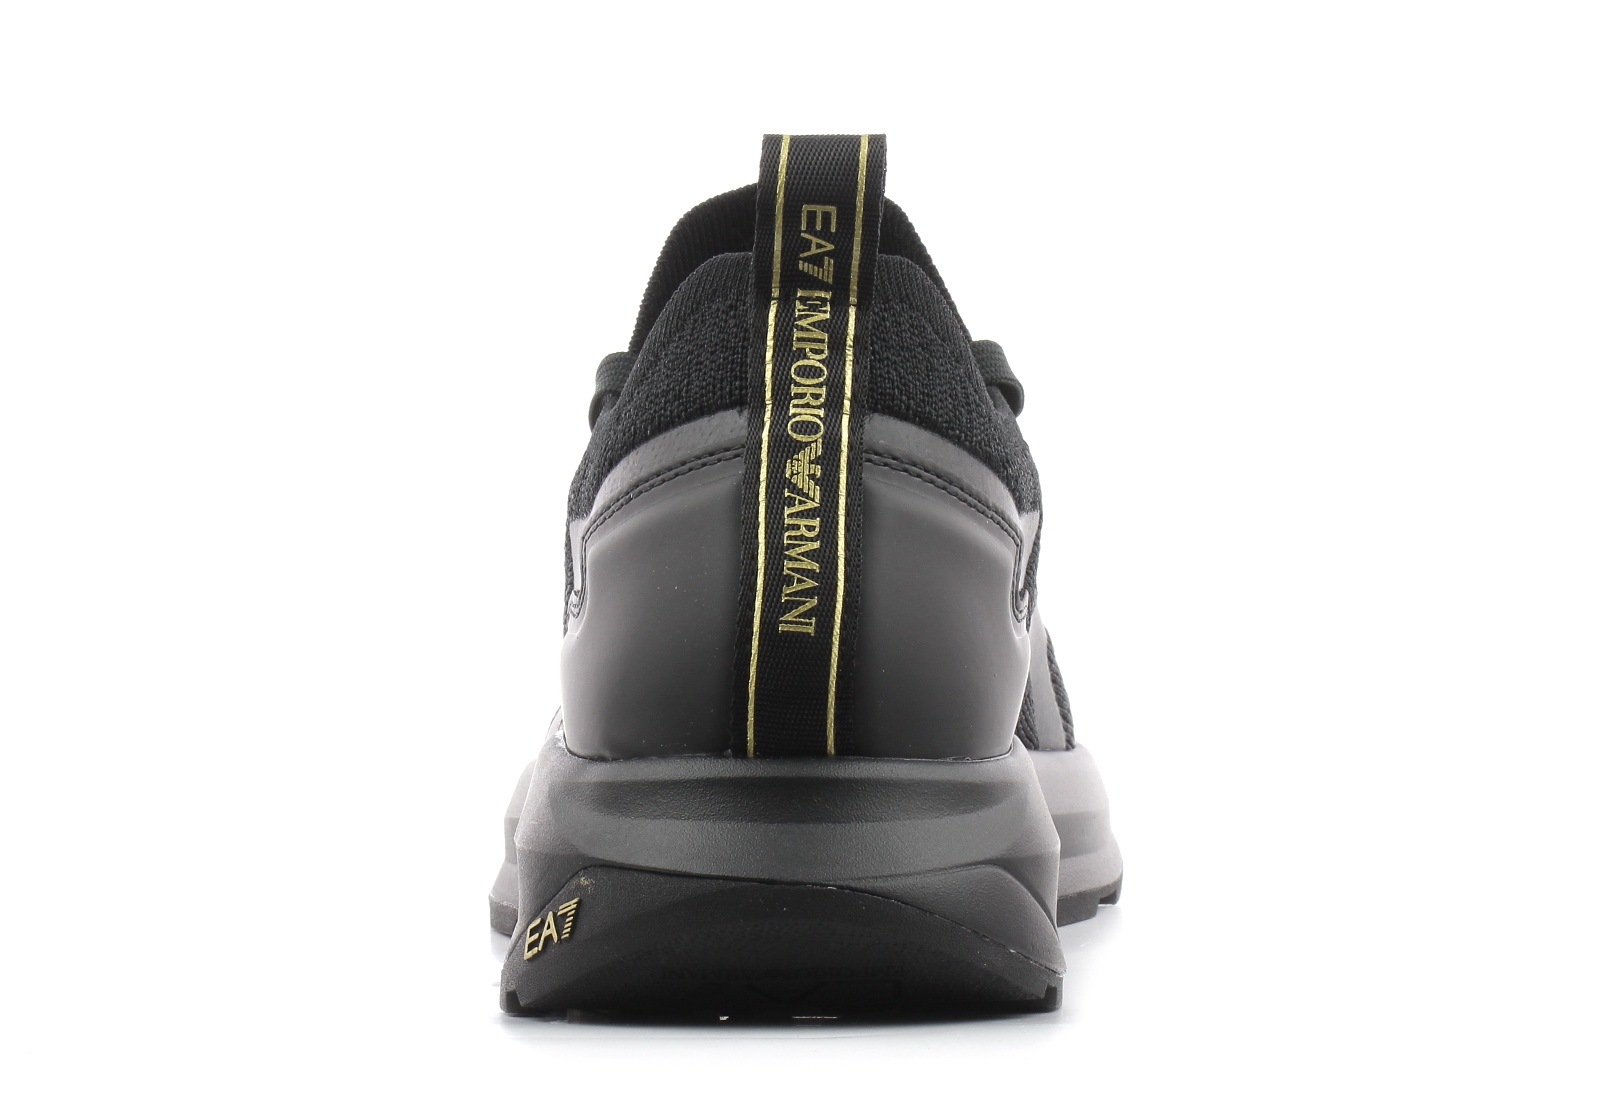 EA7 Emporio Armani Sneakers - Altura Knit - X113-XK269-701 - Online ...